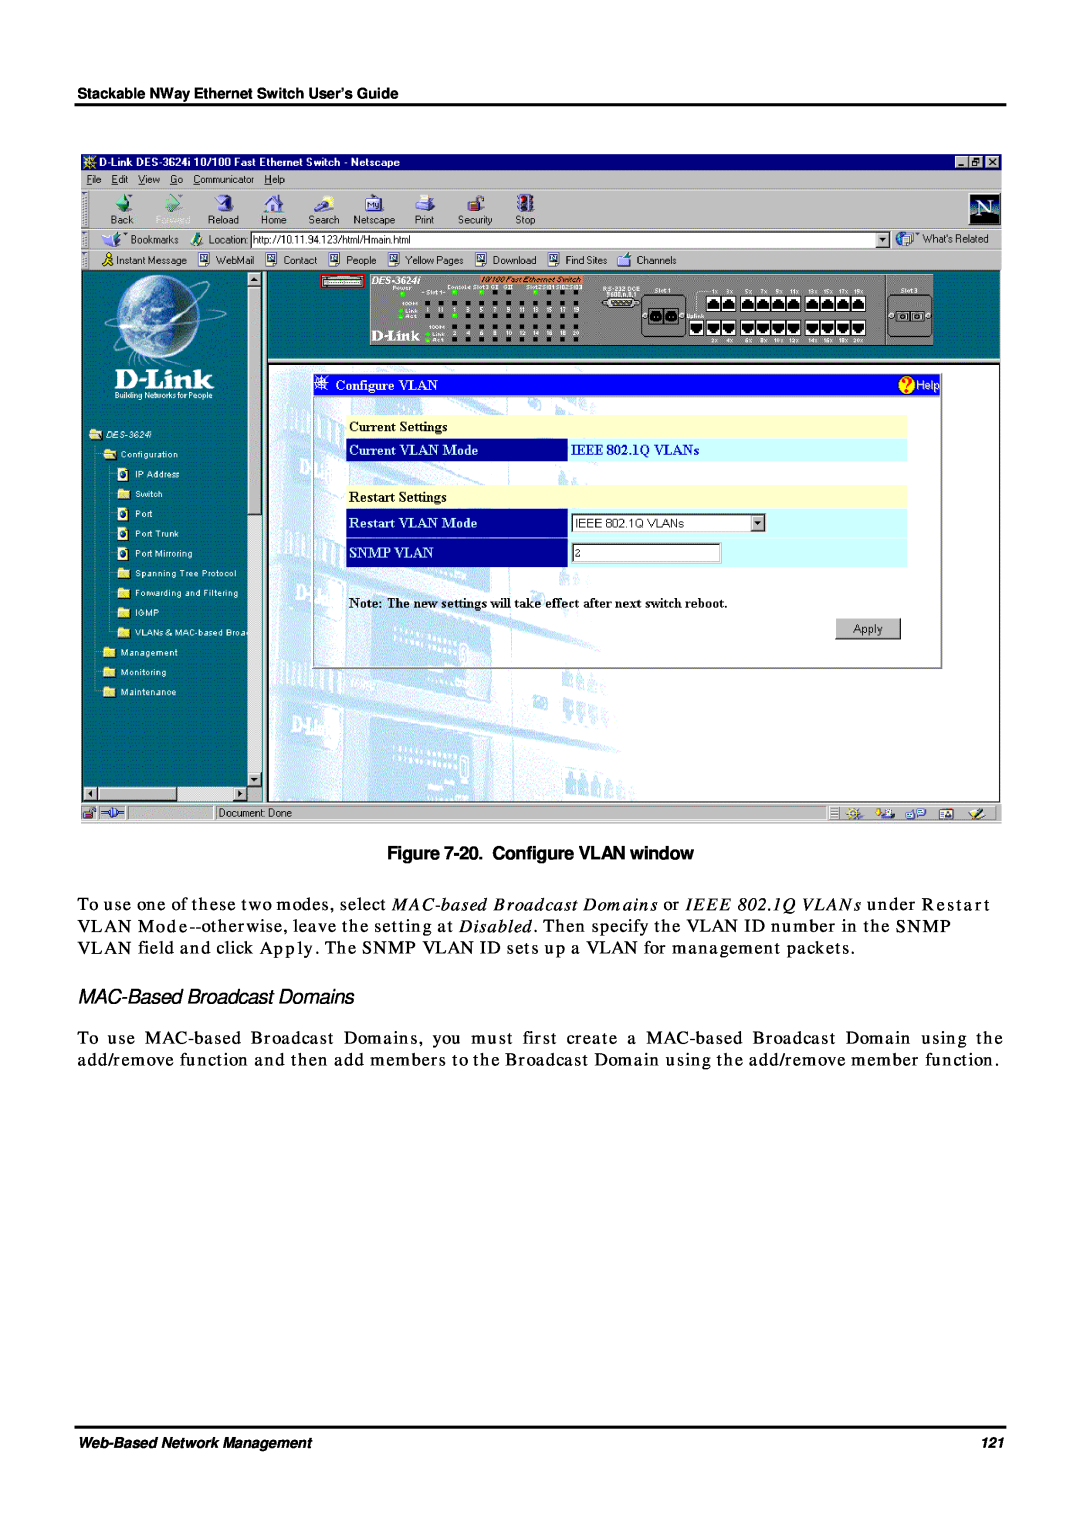 D-Link DES-3624 manual MAC-Based Broadcast Domains, 20. Configure VLAN window 